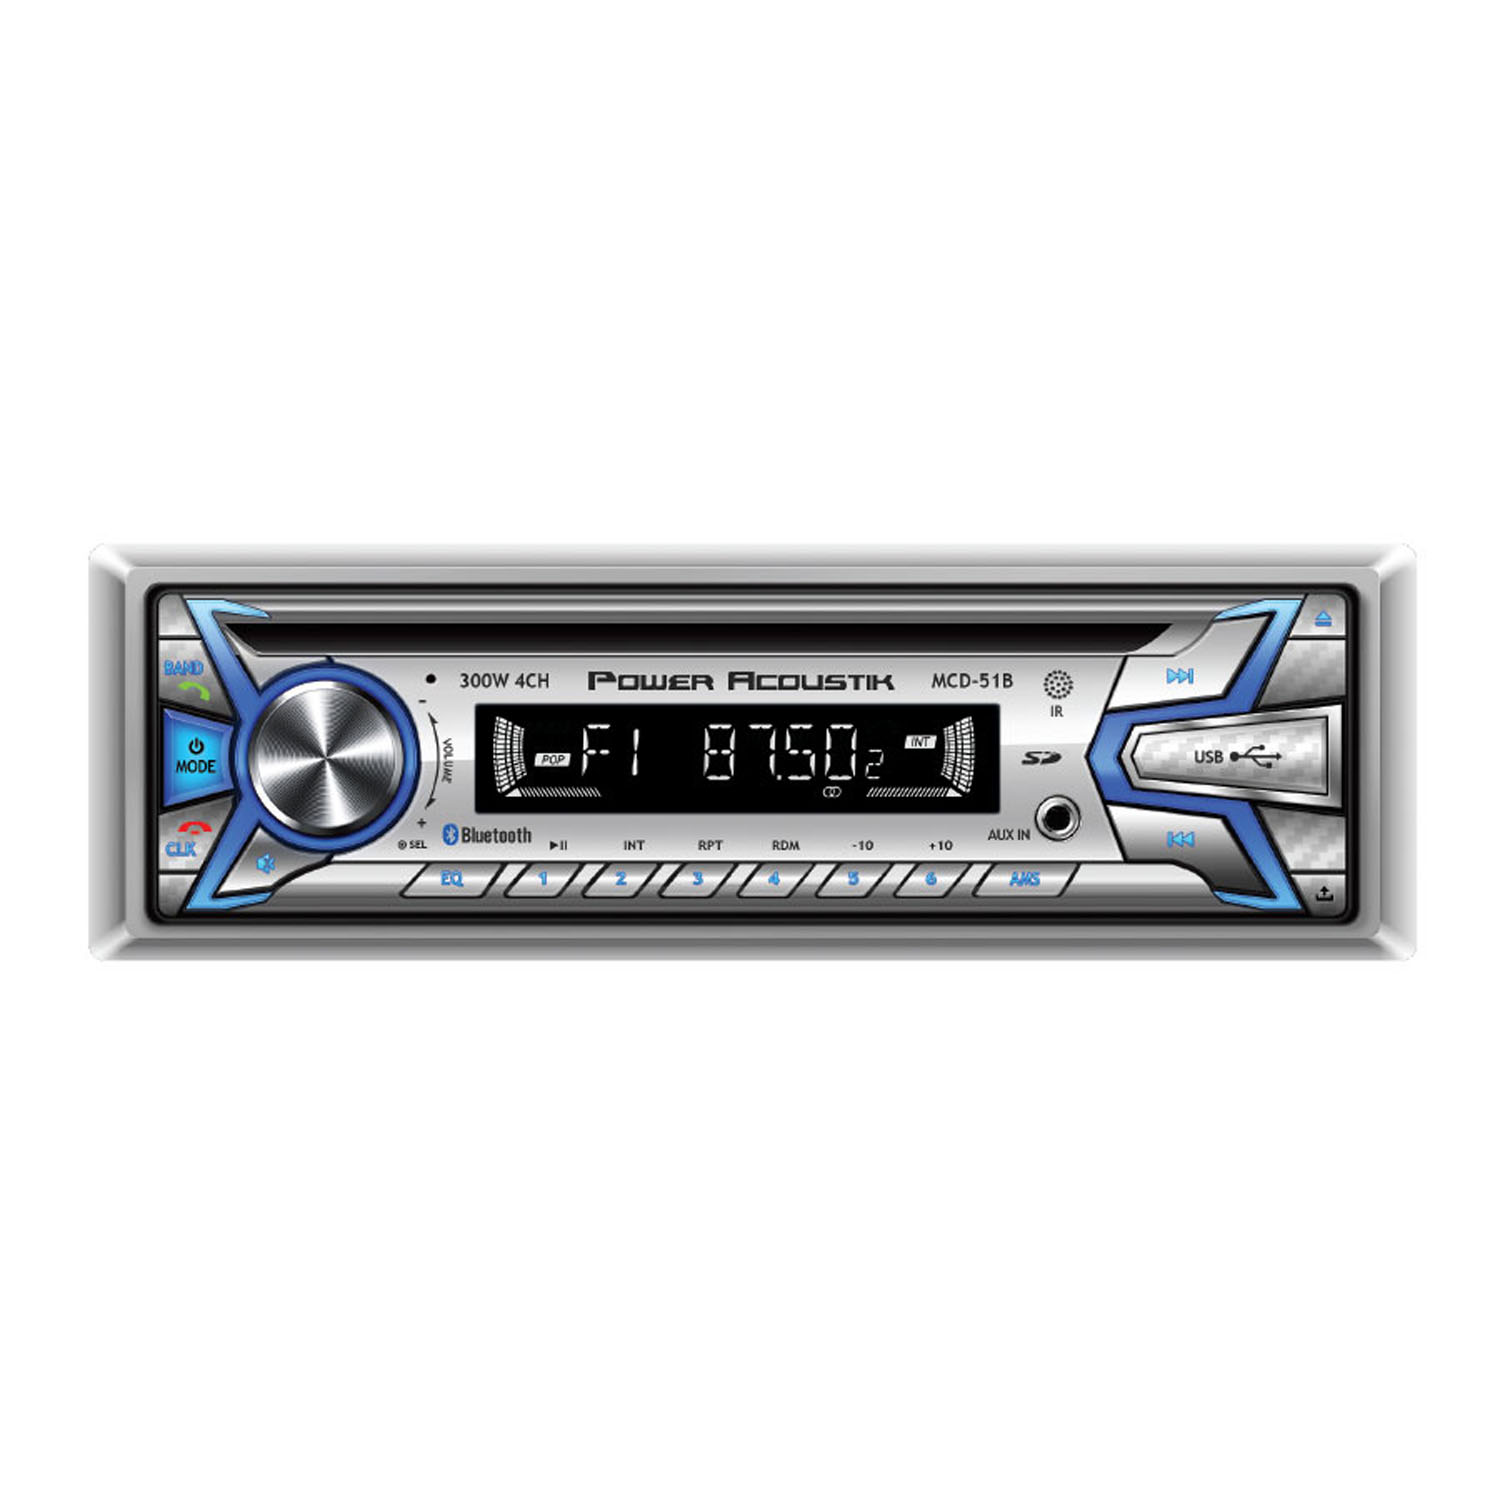 MCD51B - 1 DIN 300 WATT 4-CHANNEL MARINE GRADE AM/FM CD RECEIVER WITH 32GB SD & USB PLAYBACK, BLUETOOTH VERSION 2.0 & HANDS -FRE